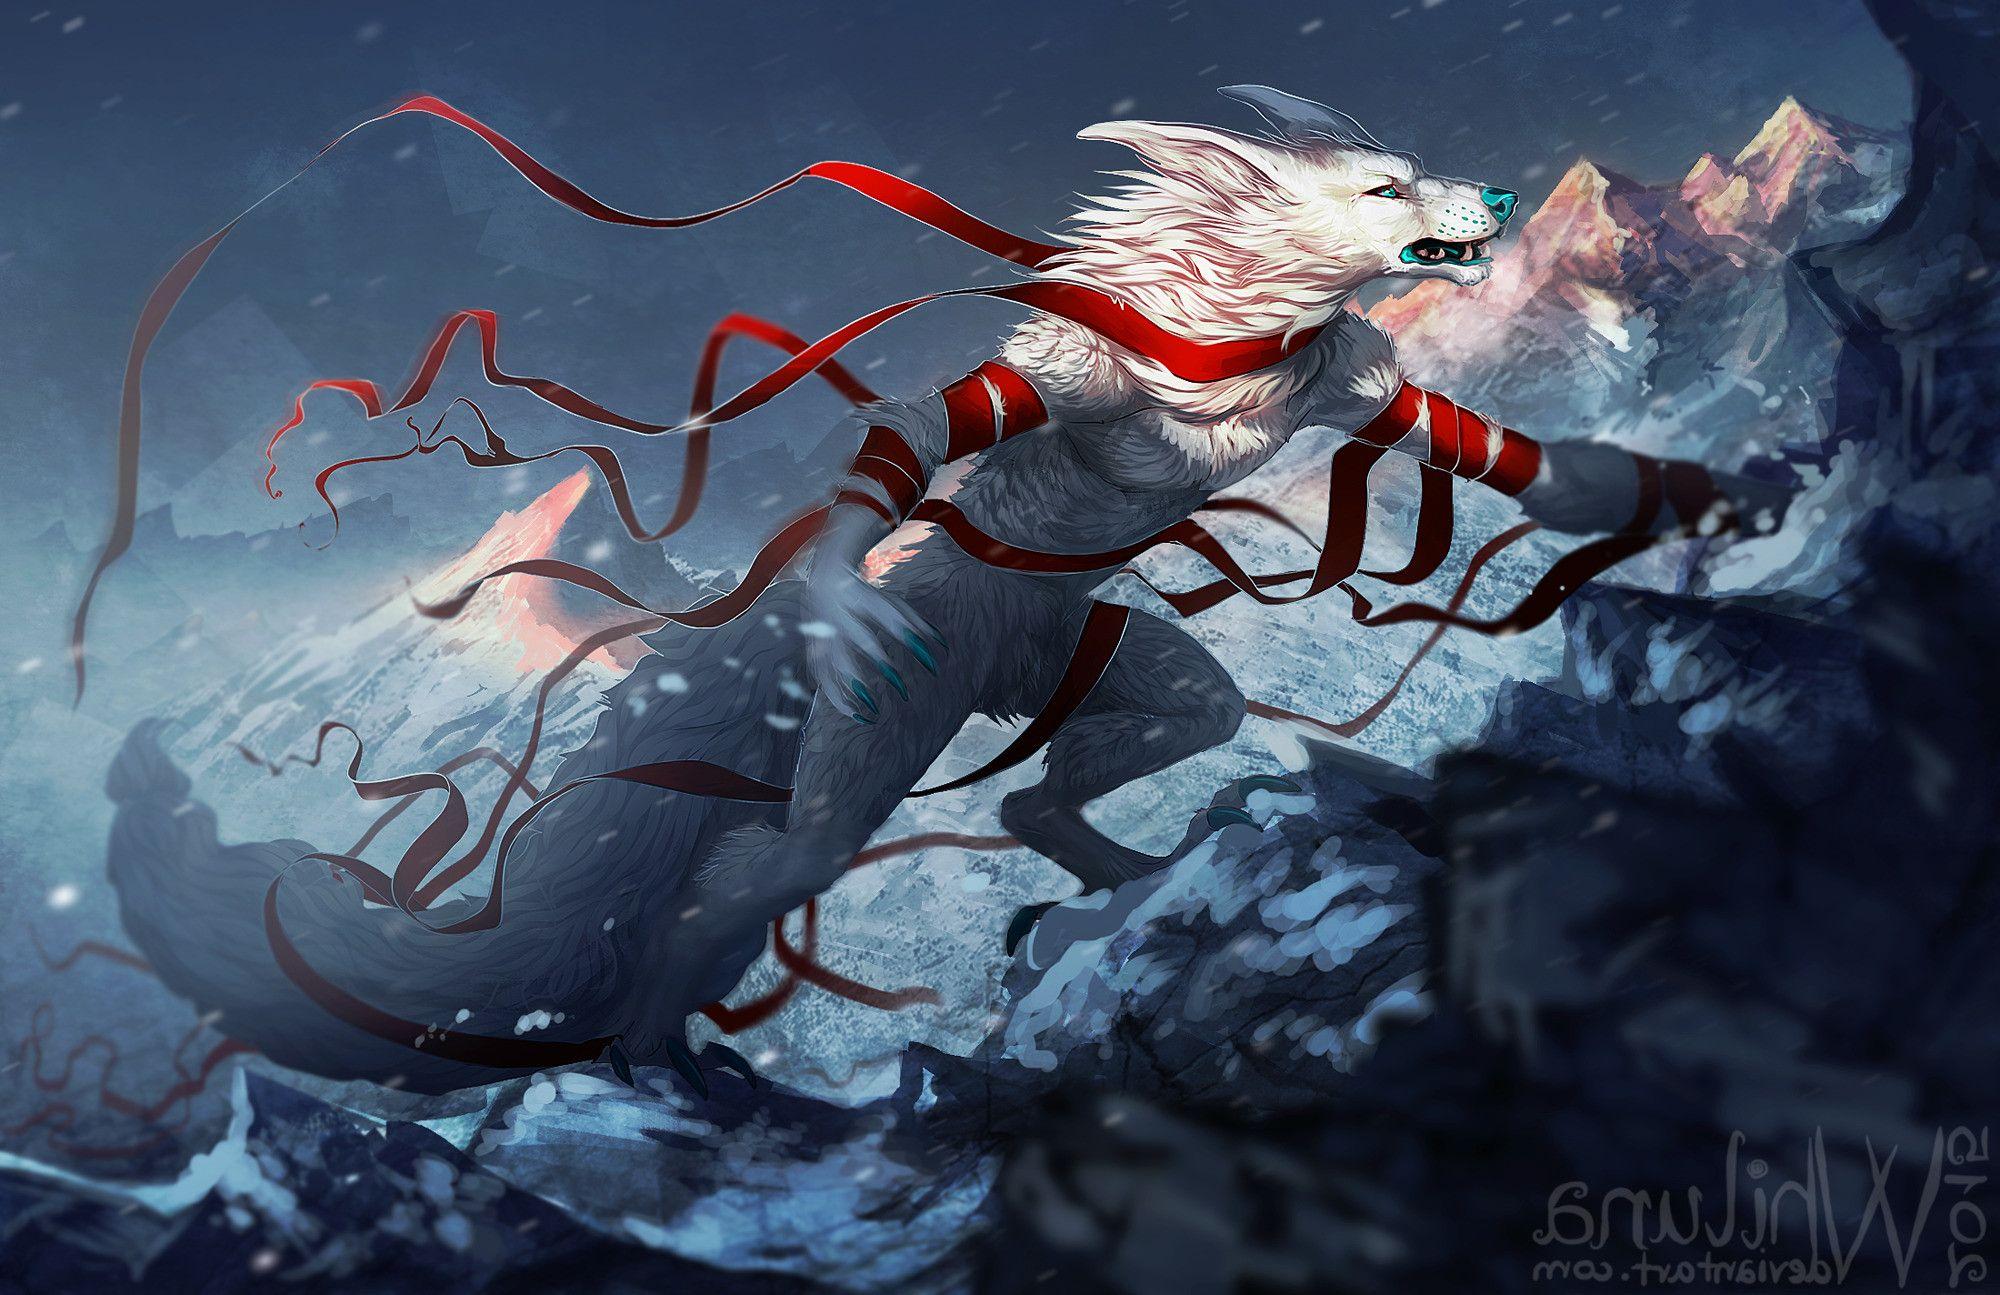 Wallpaper  anime dragon furry Anthro mythology screenshot 1366x768  px fictional character 1366x768  wallhaven  611712  HD Wallpapers   WallHere